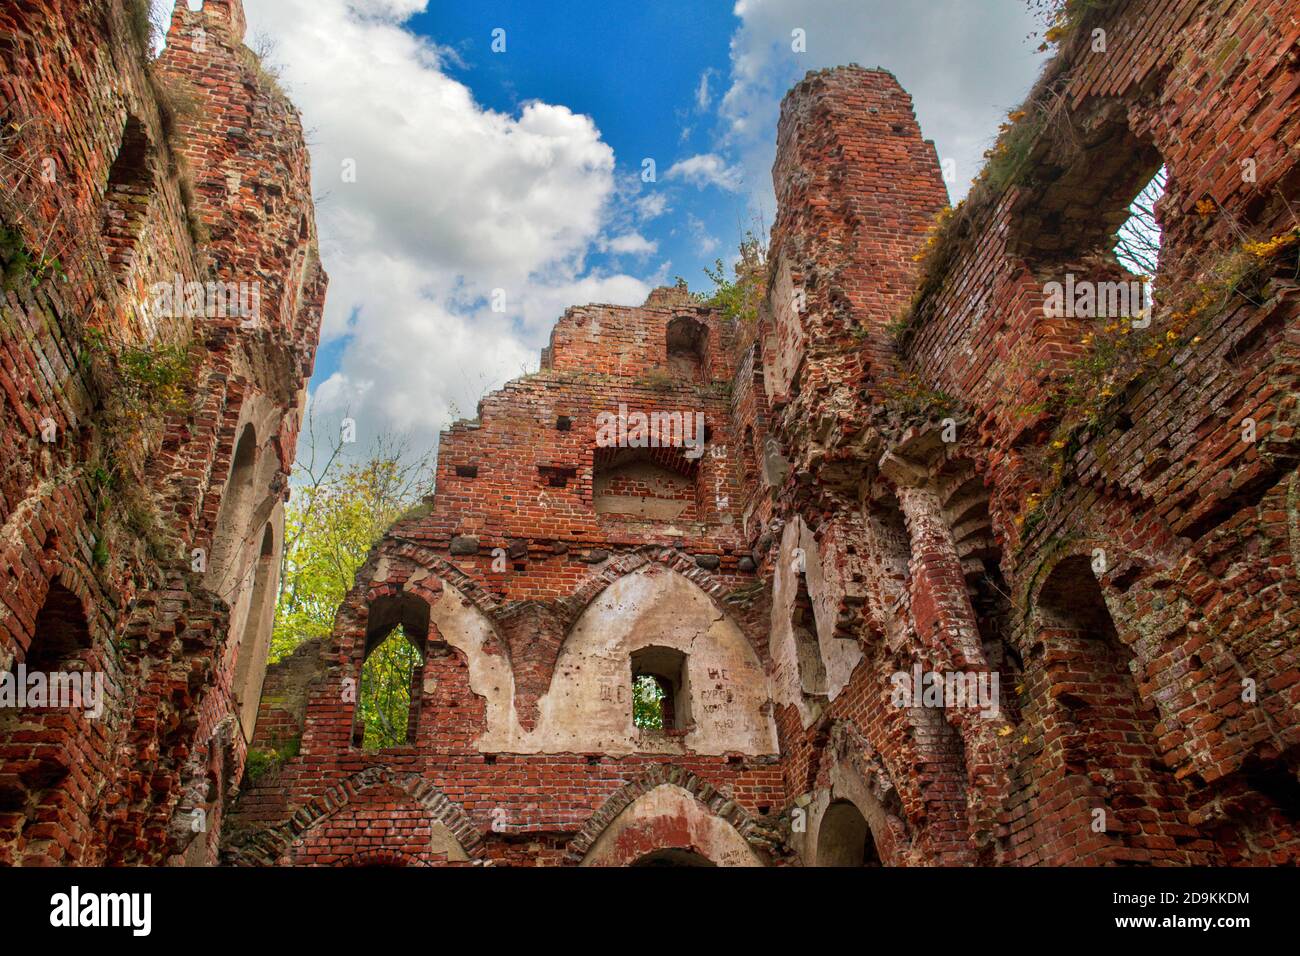 The ruins of the medieval Teutonic castle Balga in the Kaliningrad region, Russia. Stock Photo